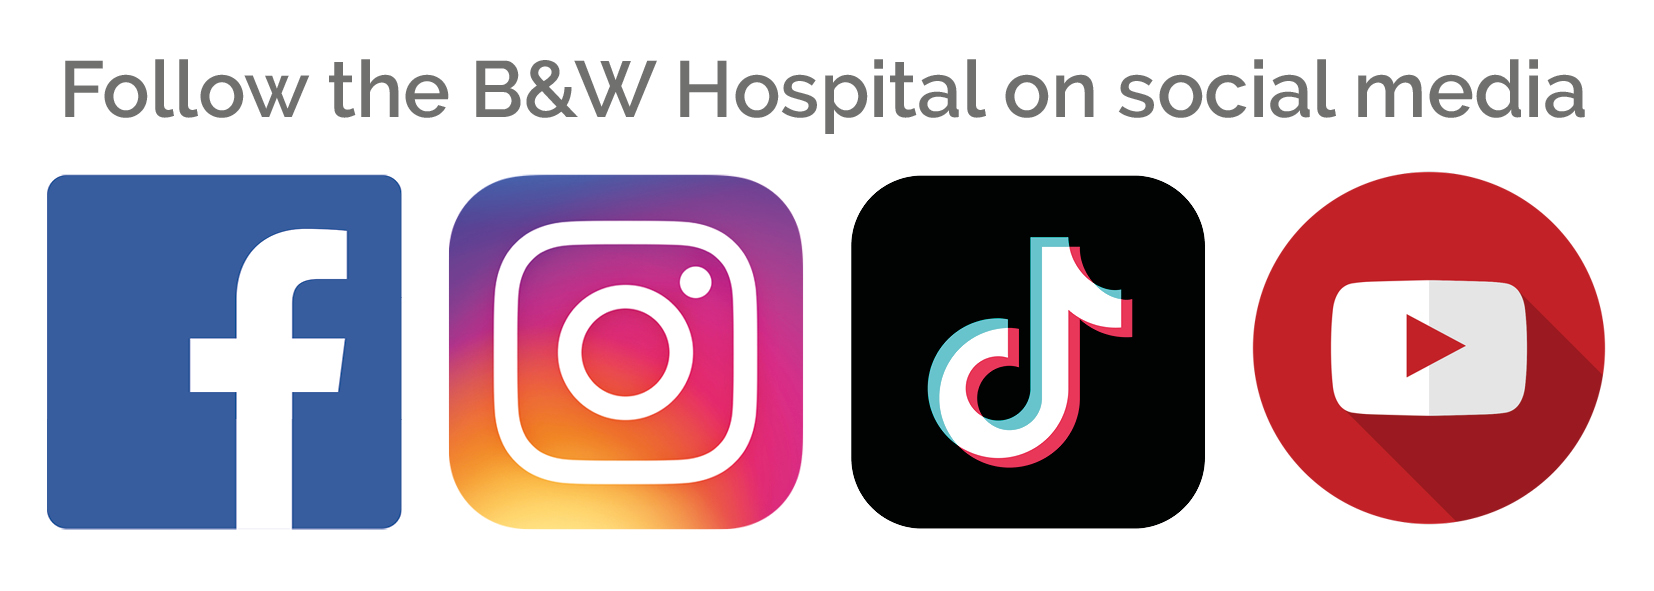 Hospital social media channels